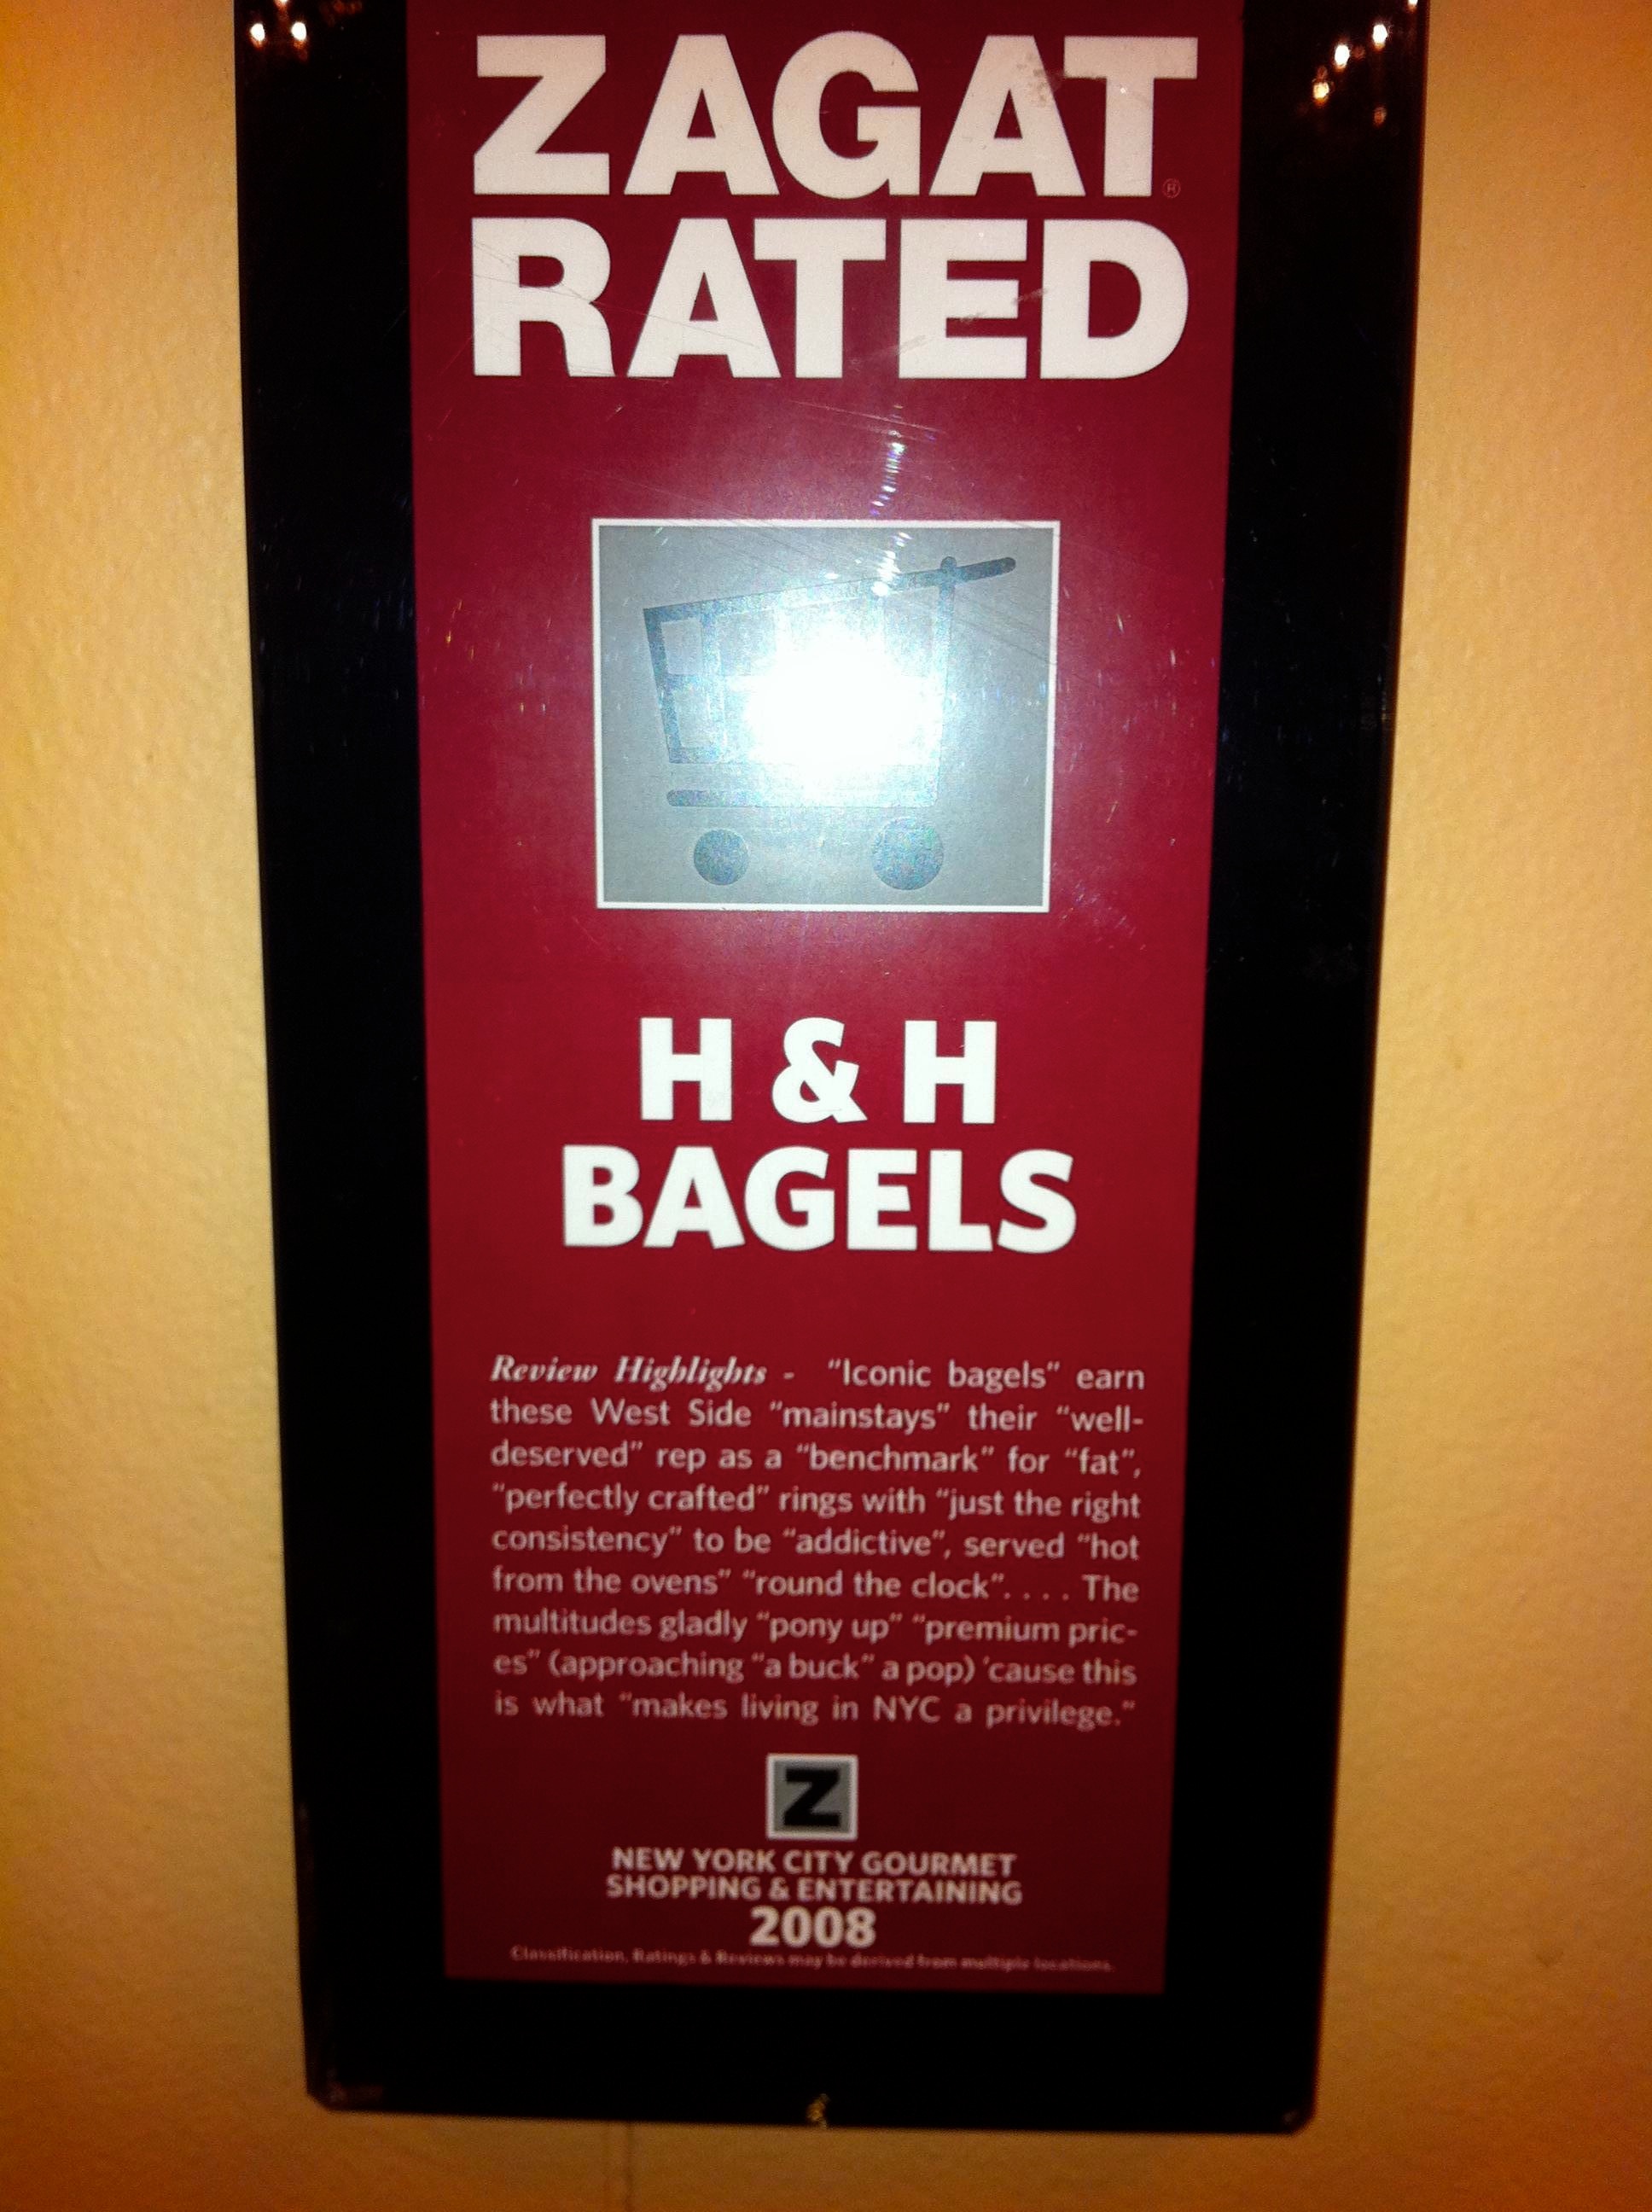 H&H Bagels Zagat Rating